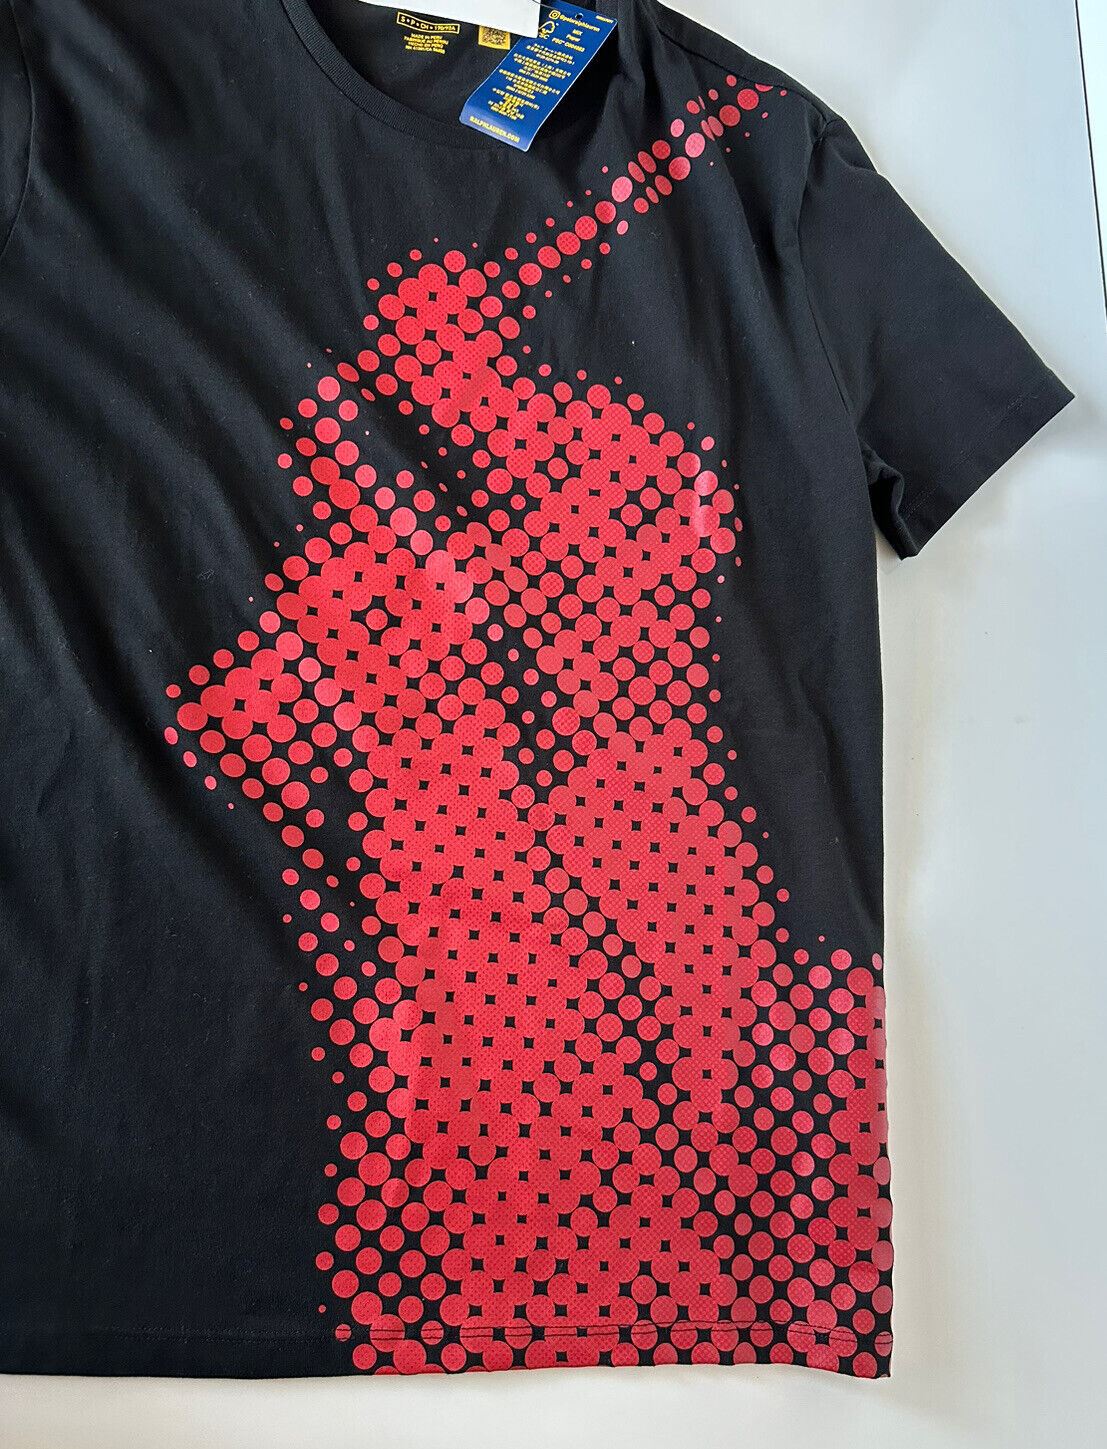 NWT $65 Polo Ralph Lauren Short Sleeve Logo T-shirt Black M